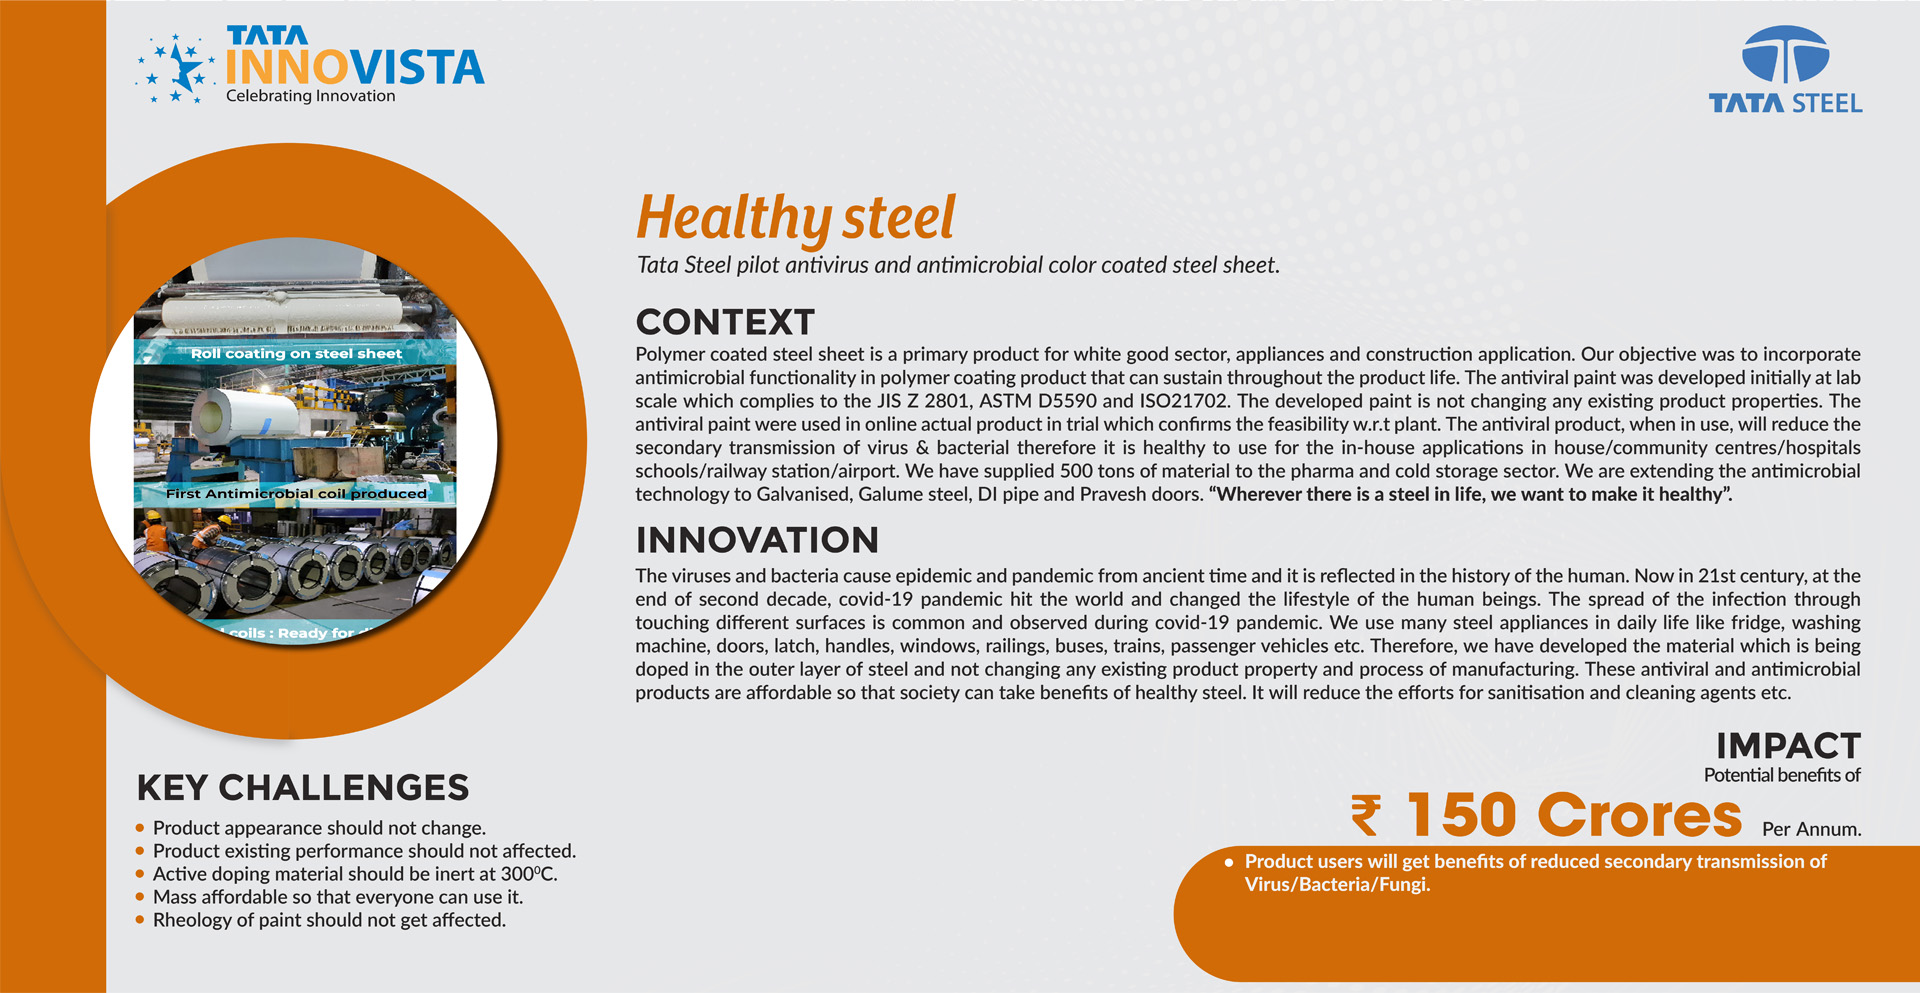 TATA STEEL - Healthy steel